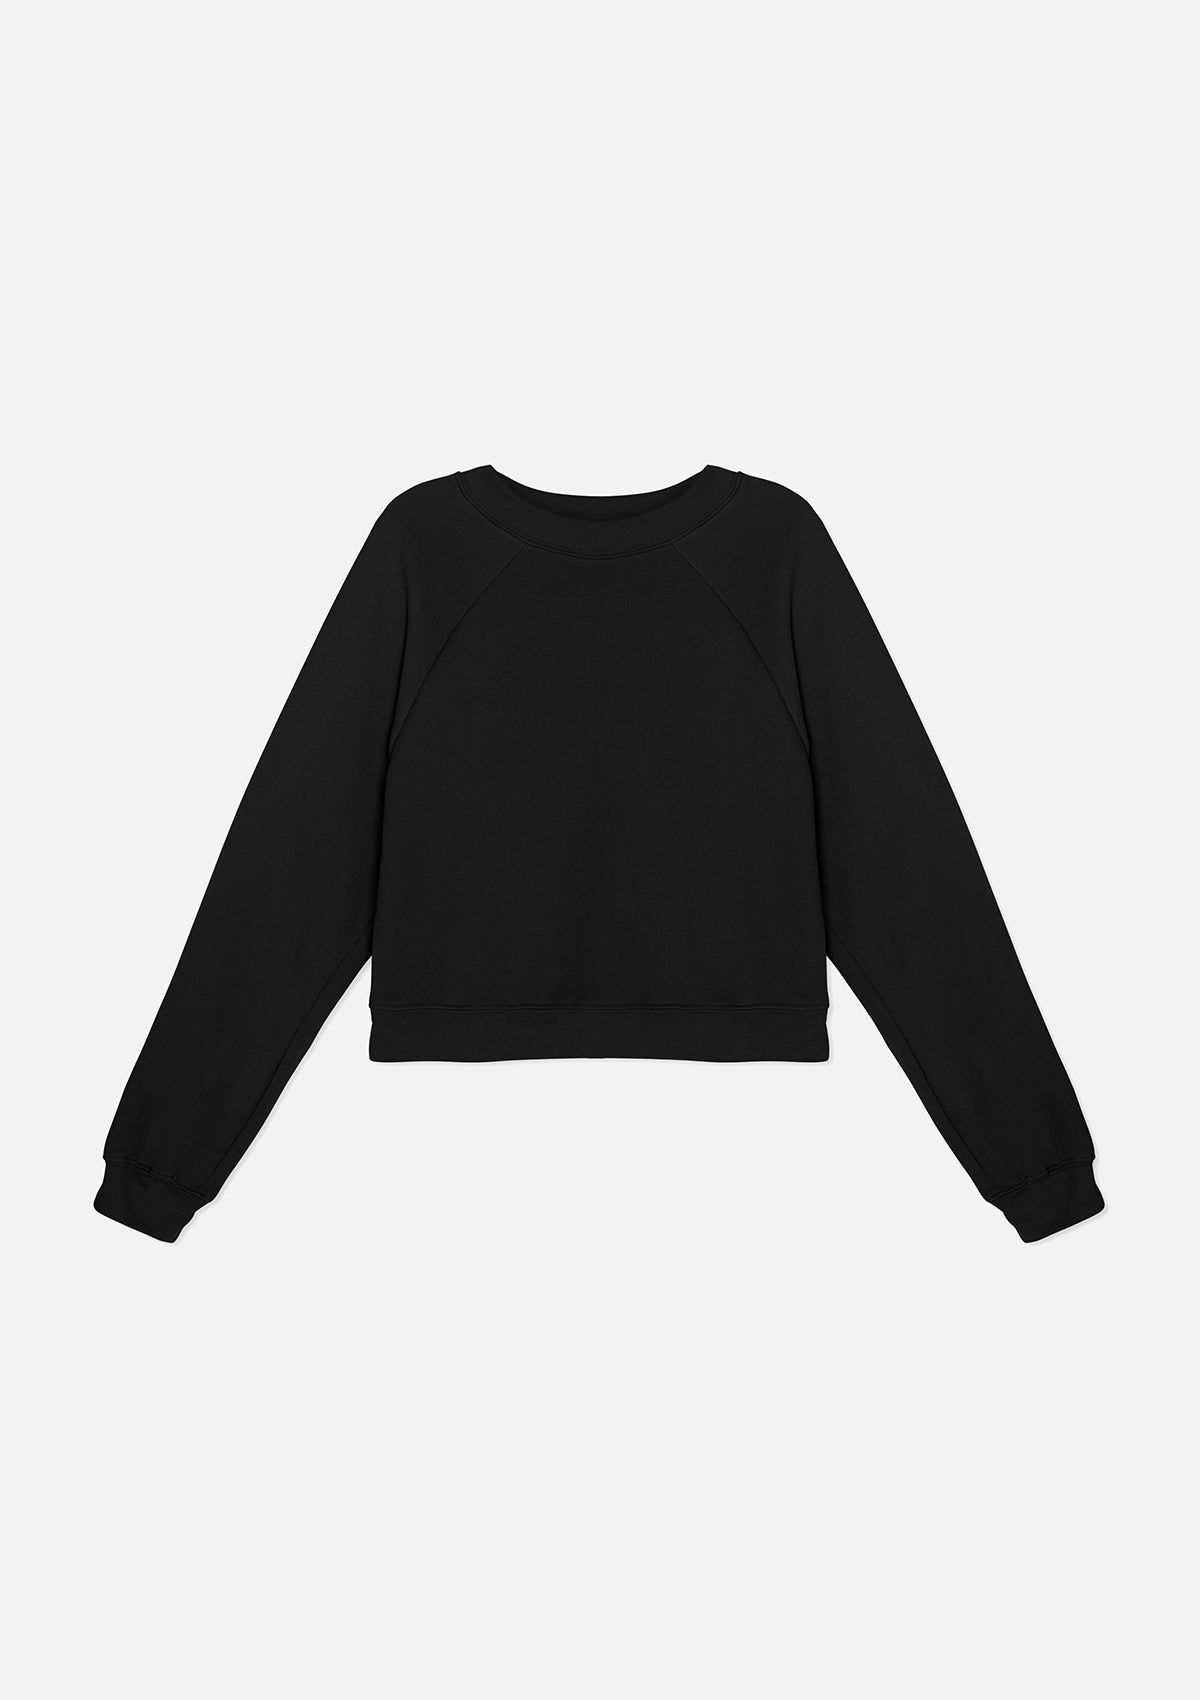 Raglan Sweatshirt | Sweatshirts for Women | Crew Neck Sweatshirt ...